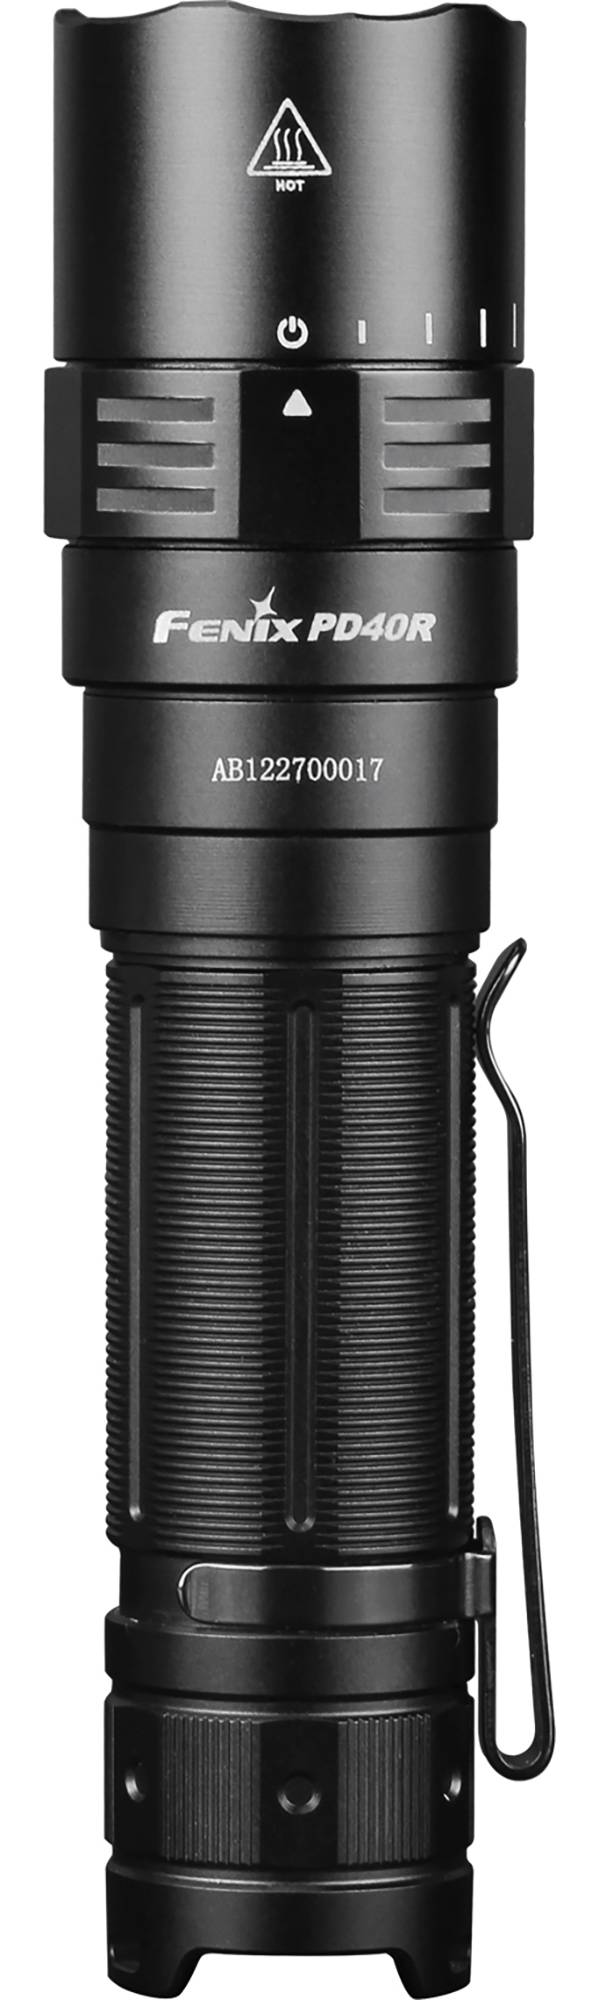 Fenix PD40R V2.0 3000 Lumen Flashlight product image